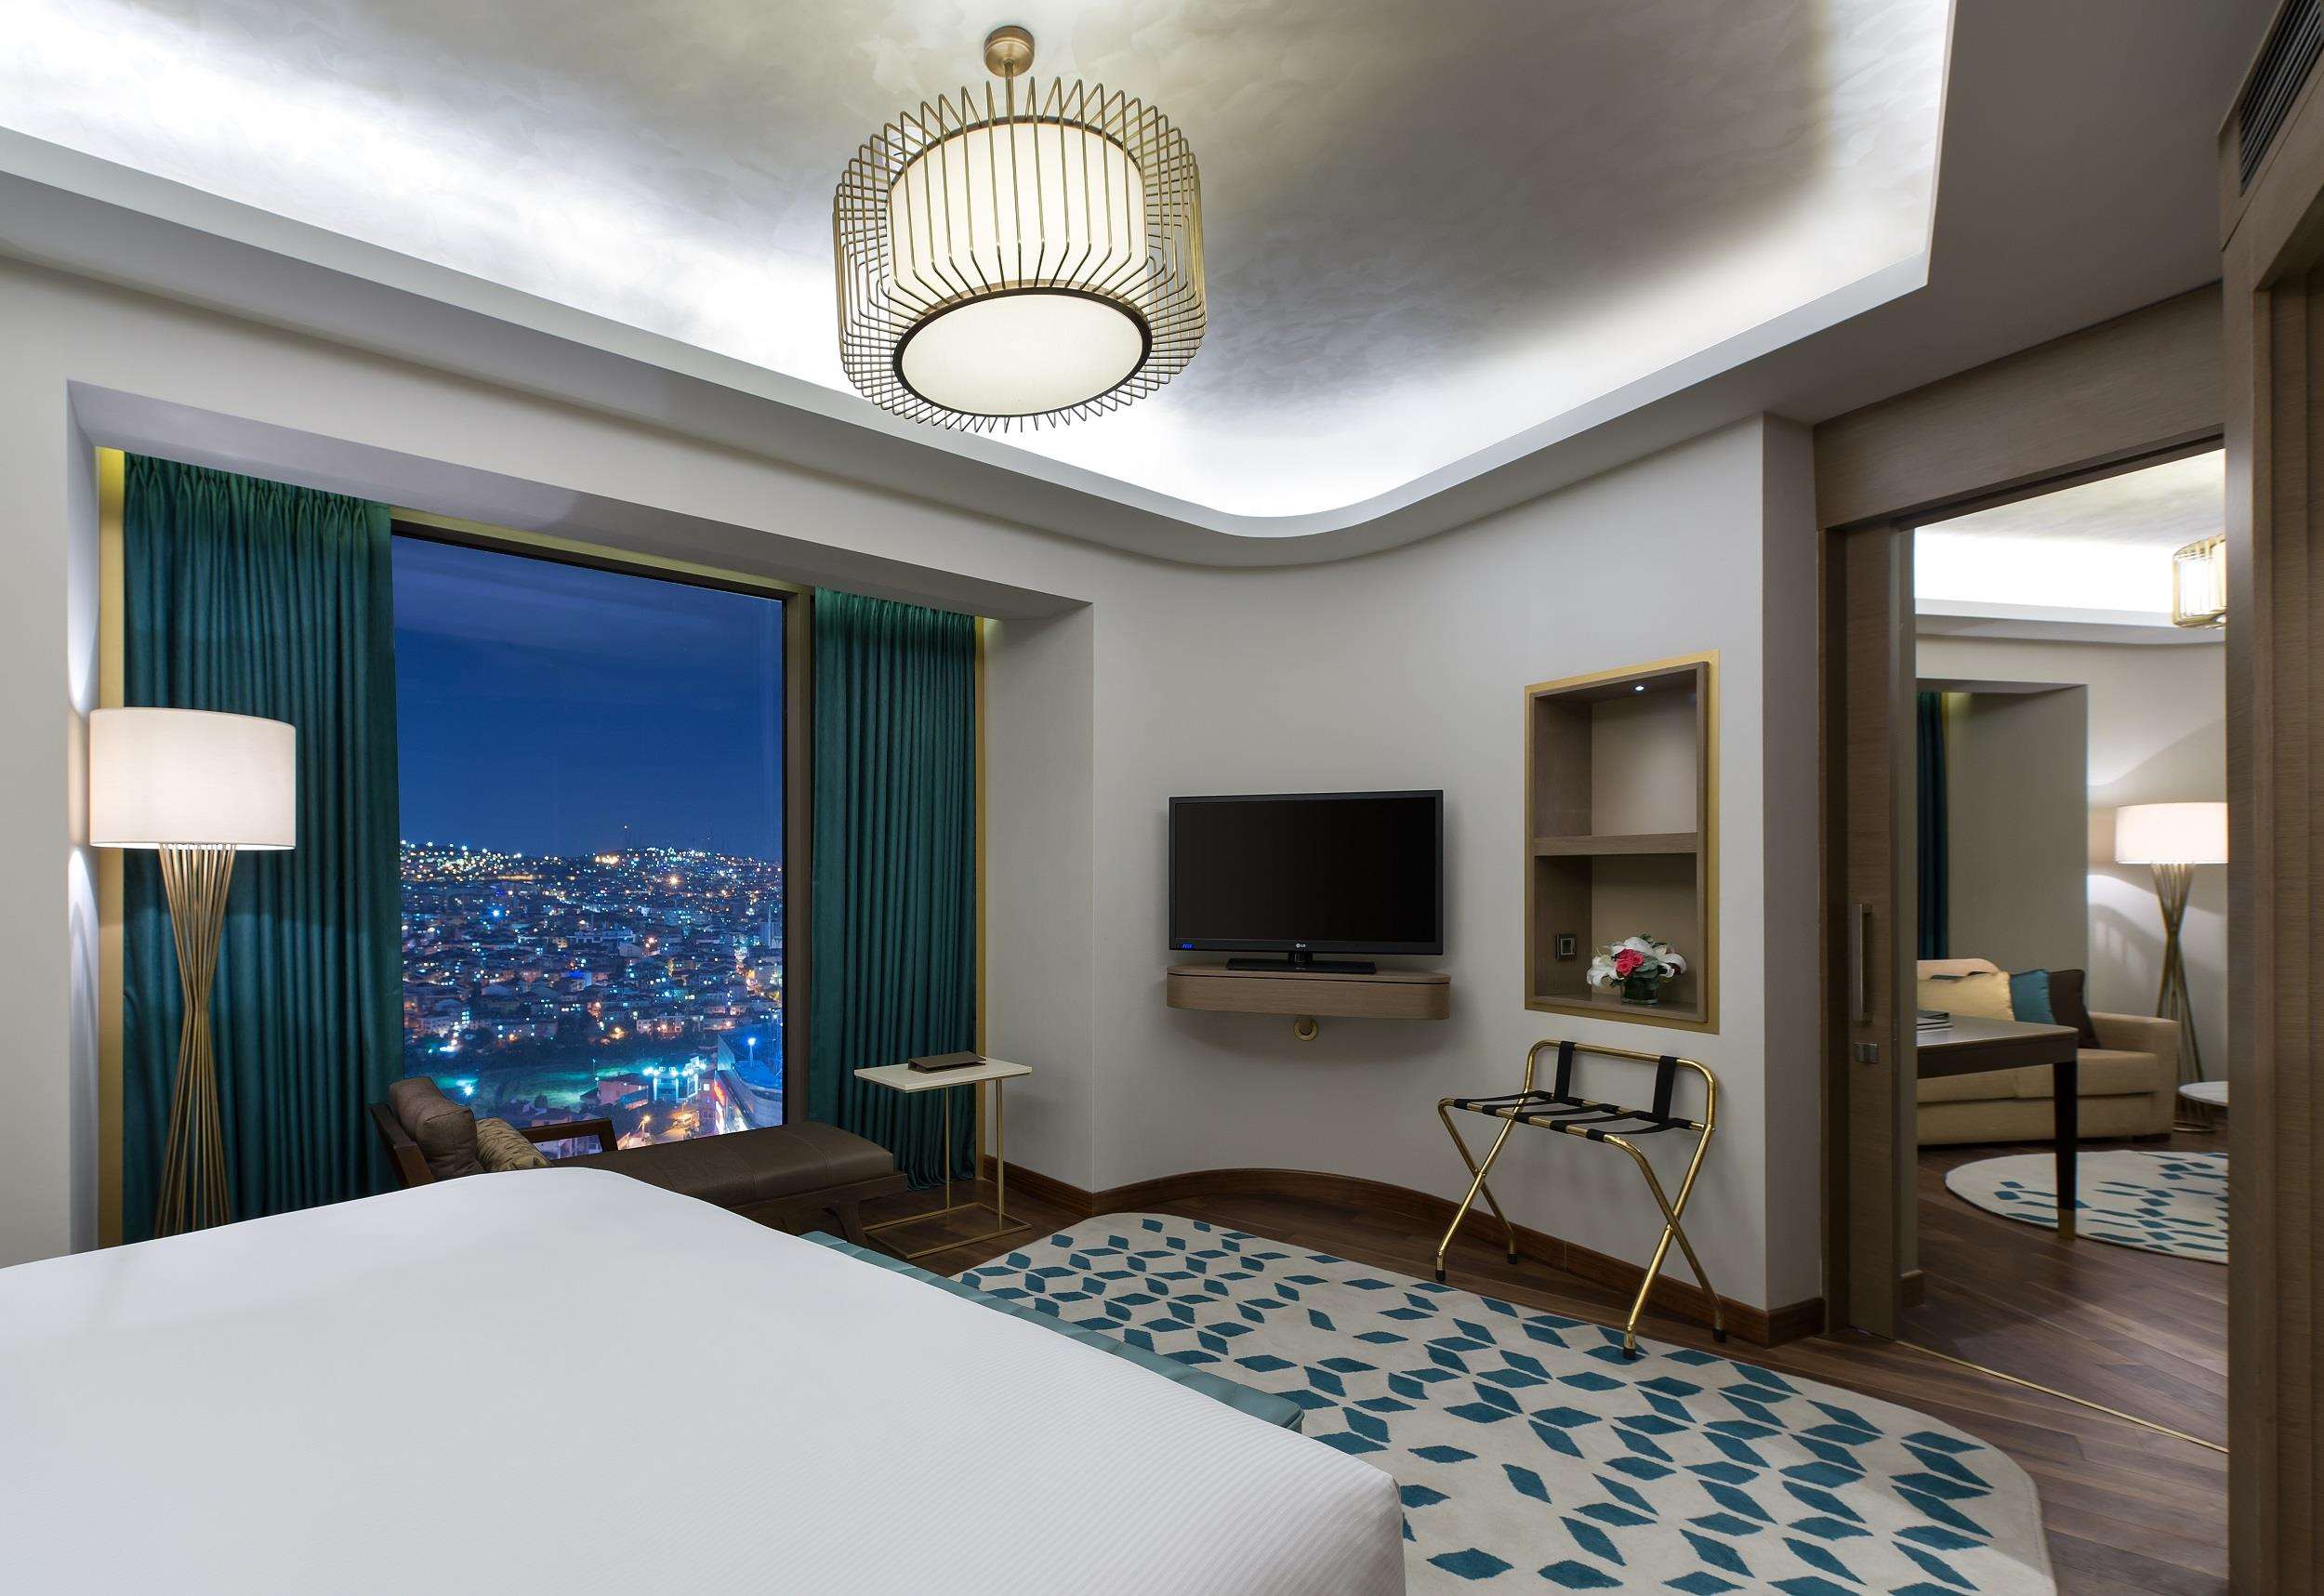 Hilton Istanbul Kozyatagi